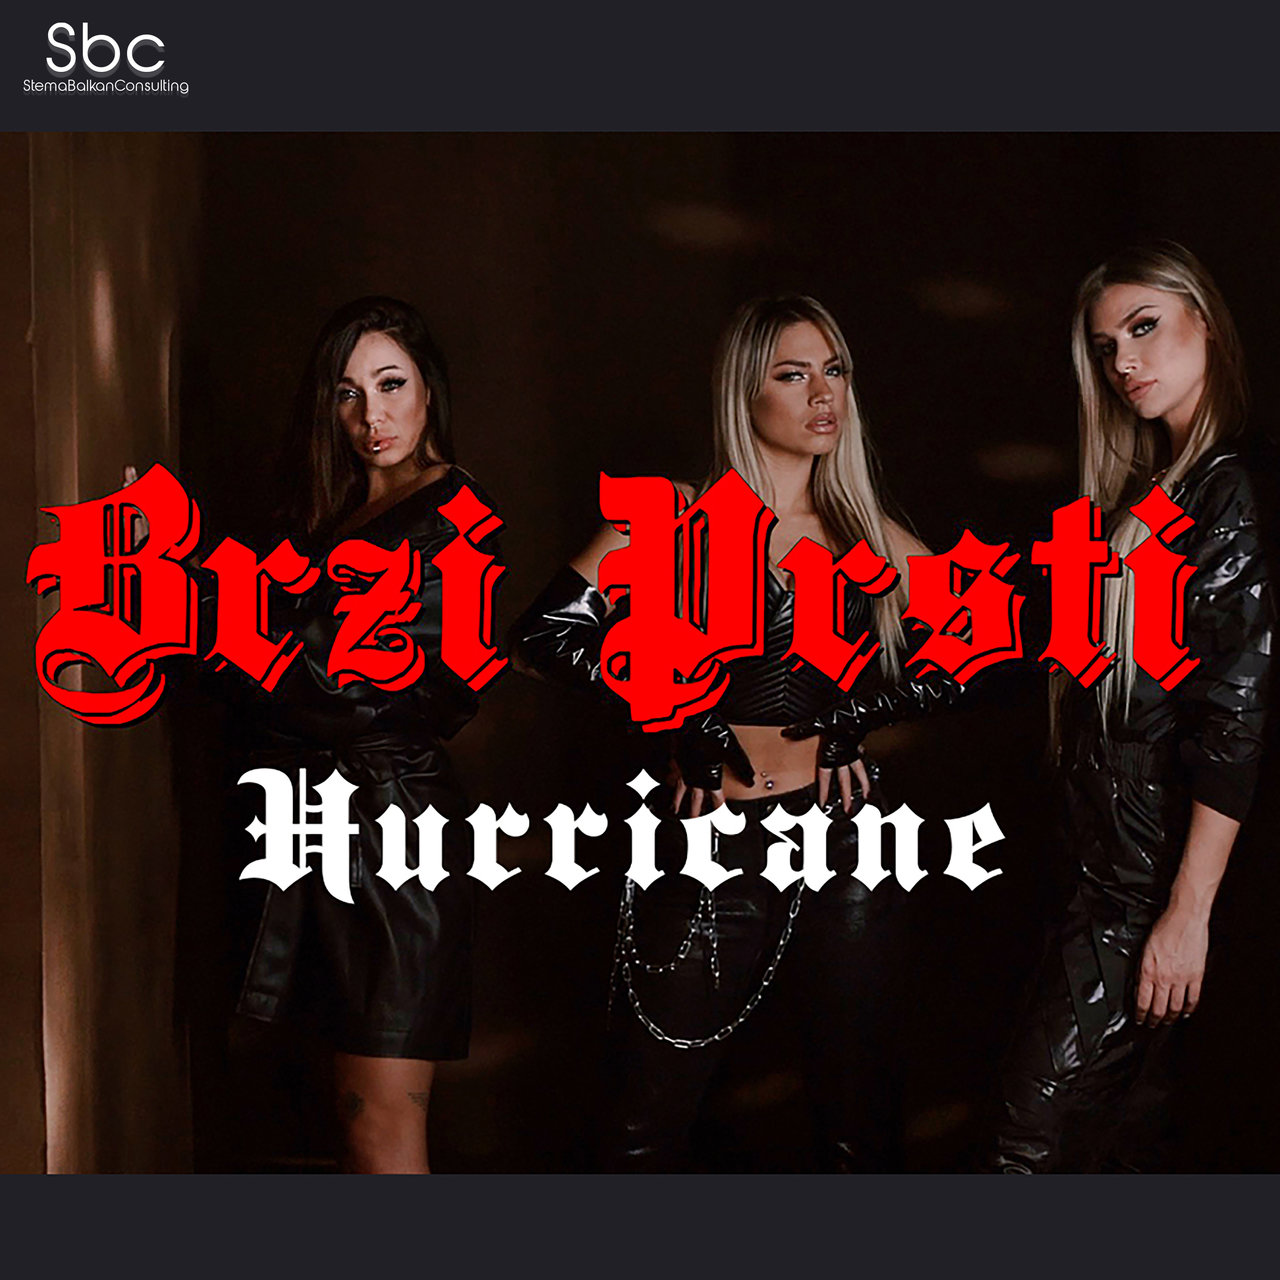 Hurricane Brzi Prsti cover artwork